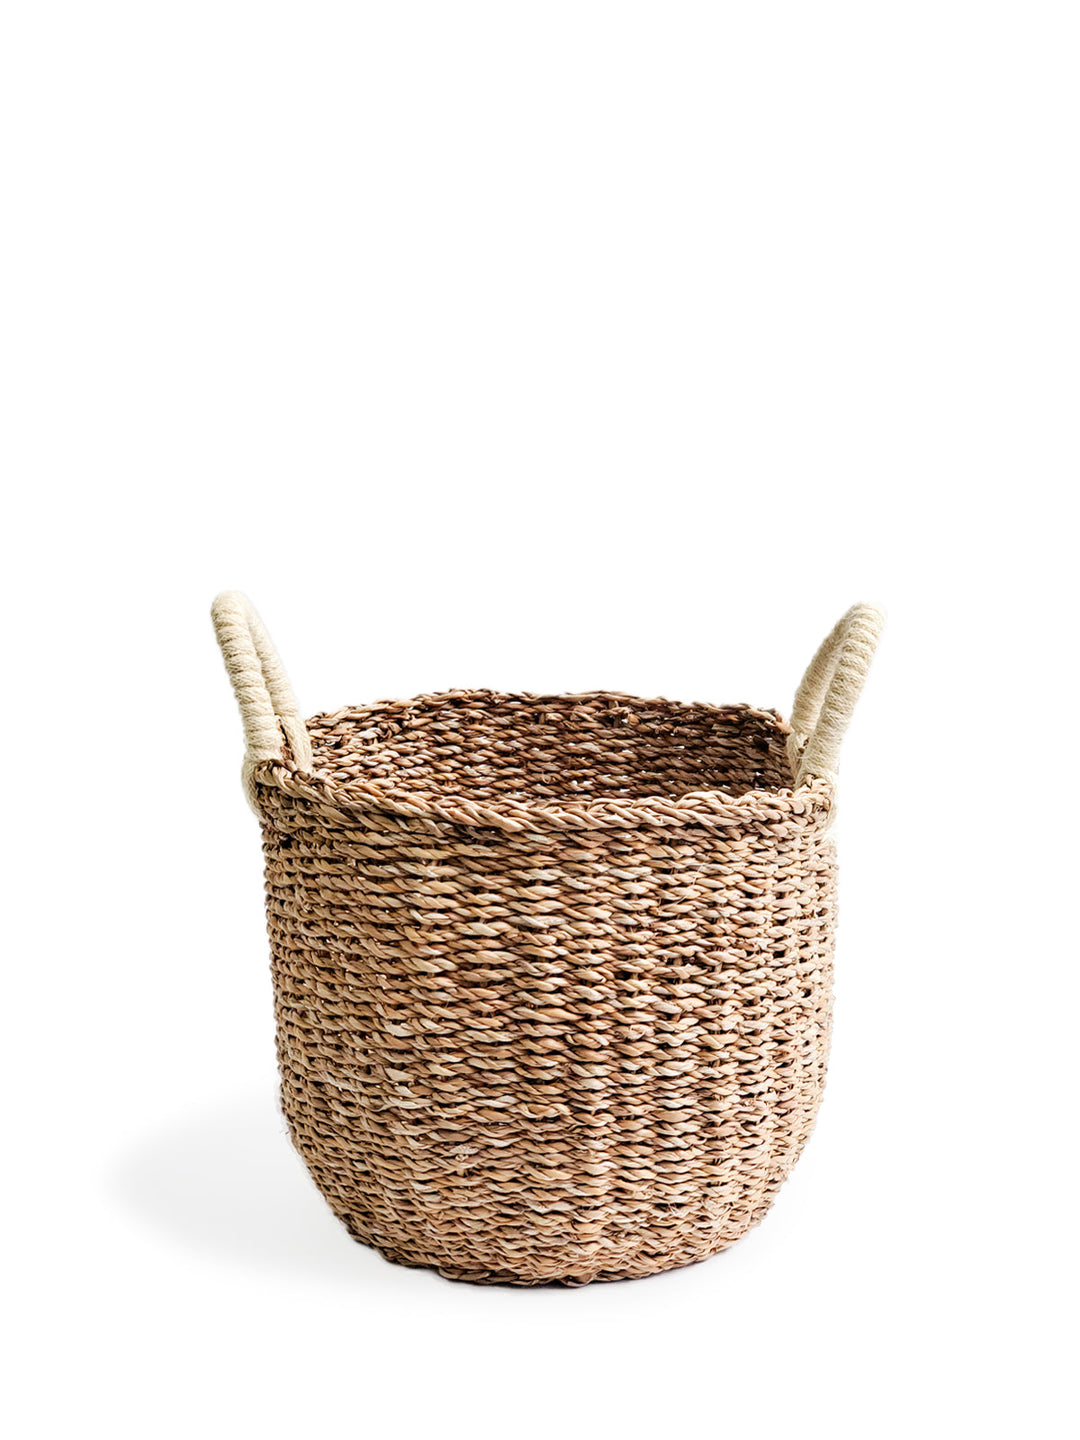 Savar Basket Seagrass with White Jute Handle Eco Friendly Storage